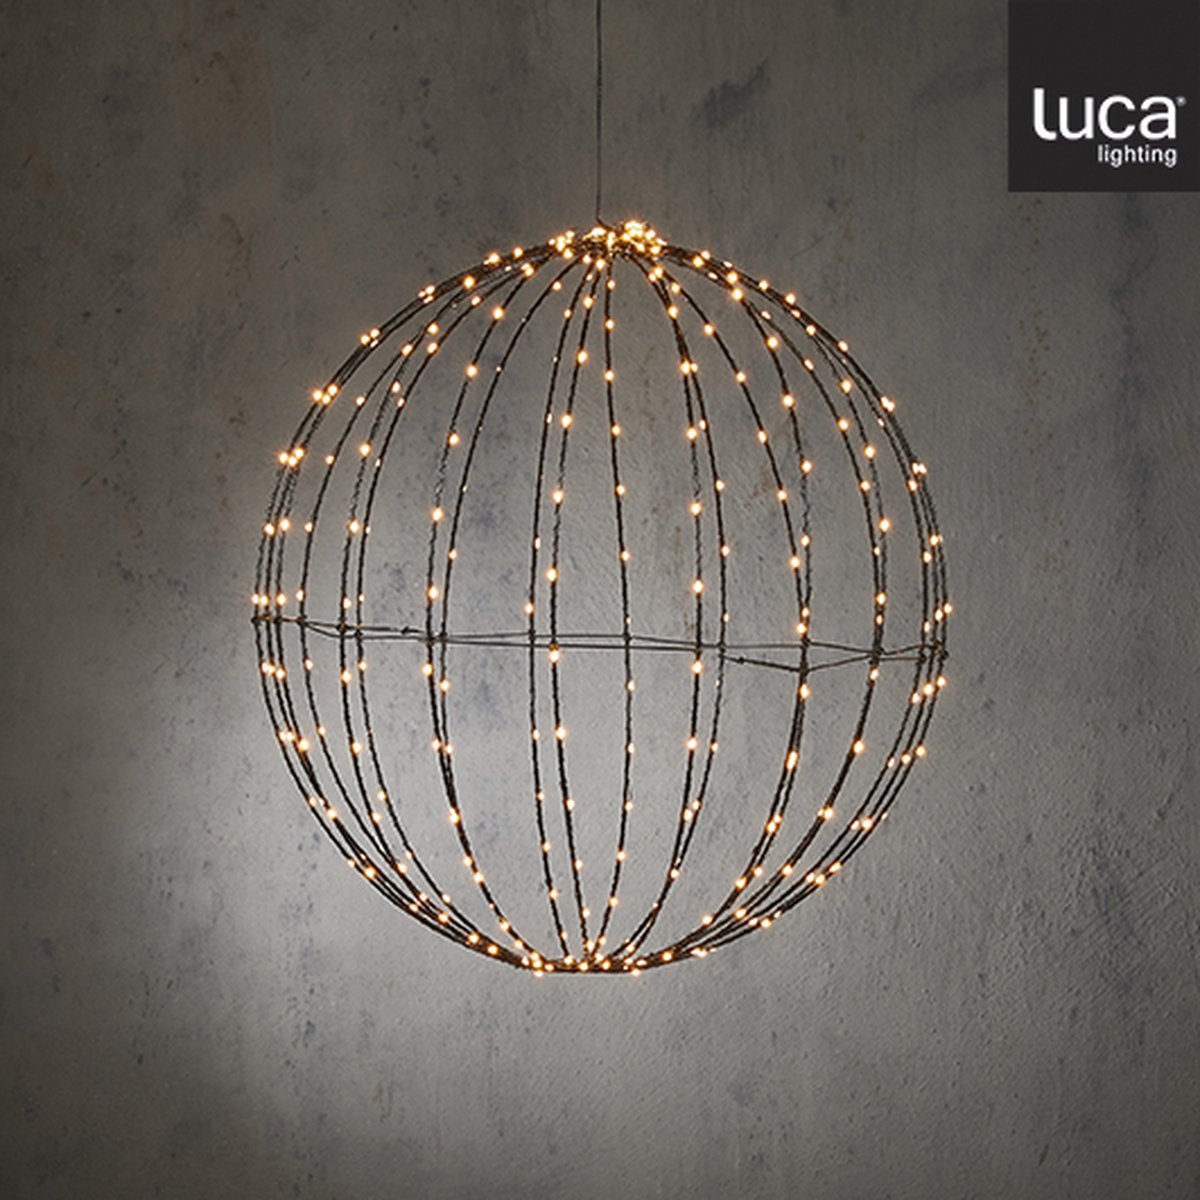 Luca Lighting Kerstverlichting Bal met Warm Witte LED Lampjes - Ø50 cm -  Zwart | bol.com